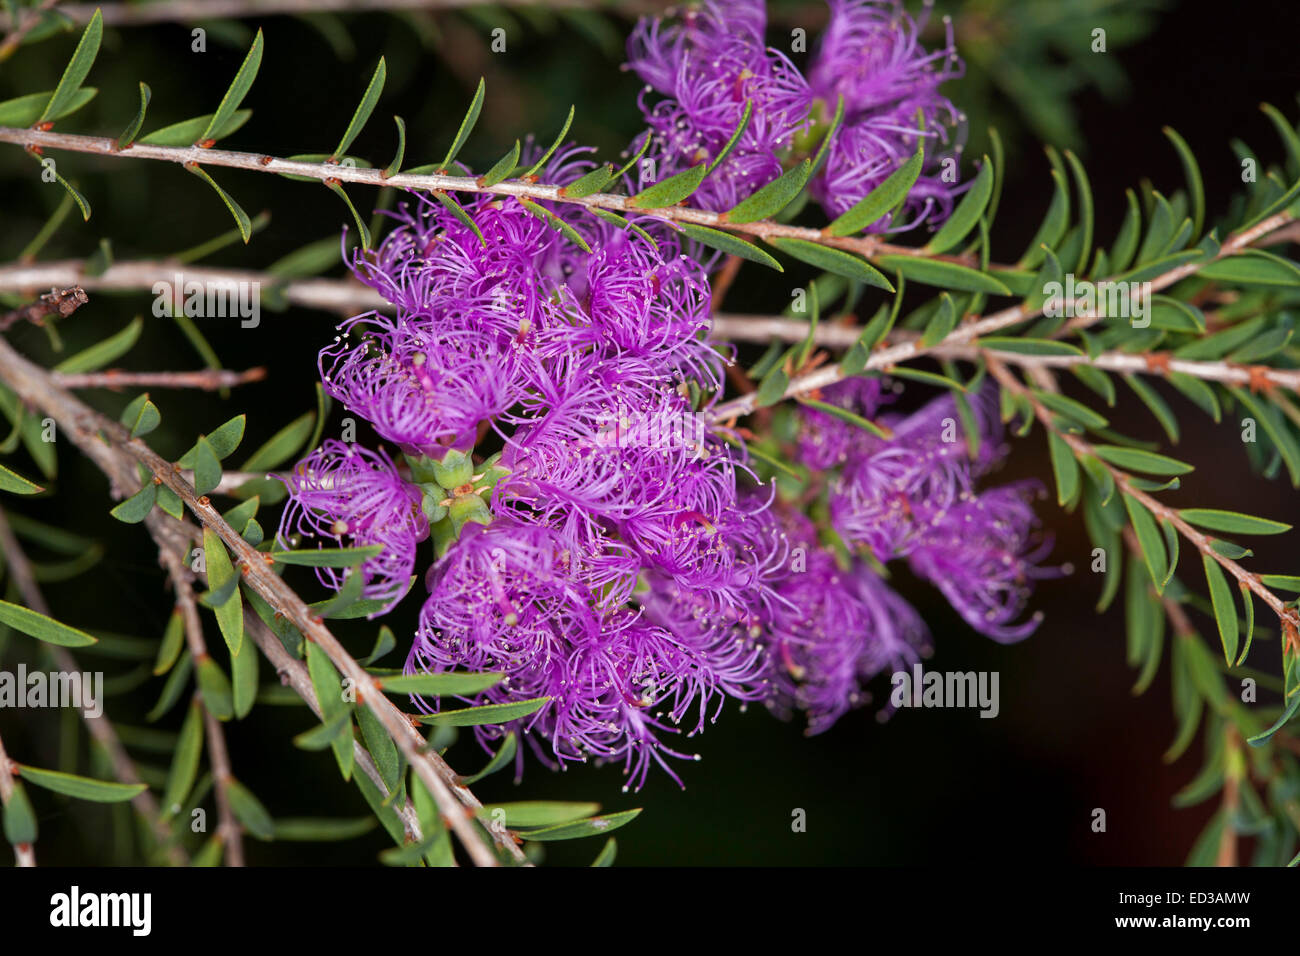 Cluster of vivid purple flowers and small green leaves of Melaleuca thymifolia, Australian native shrub / wildflowers, against dark background Stock Photo